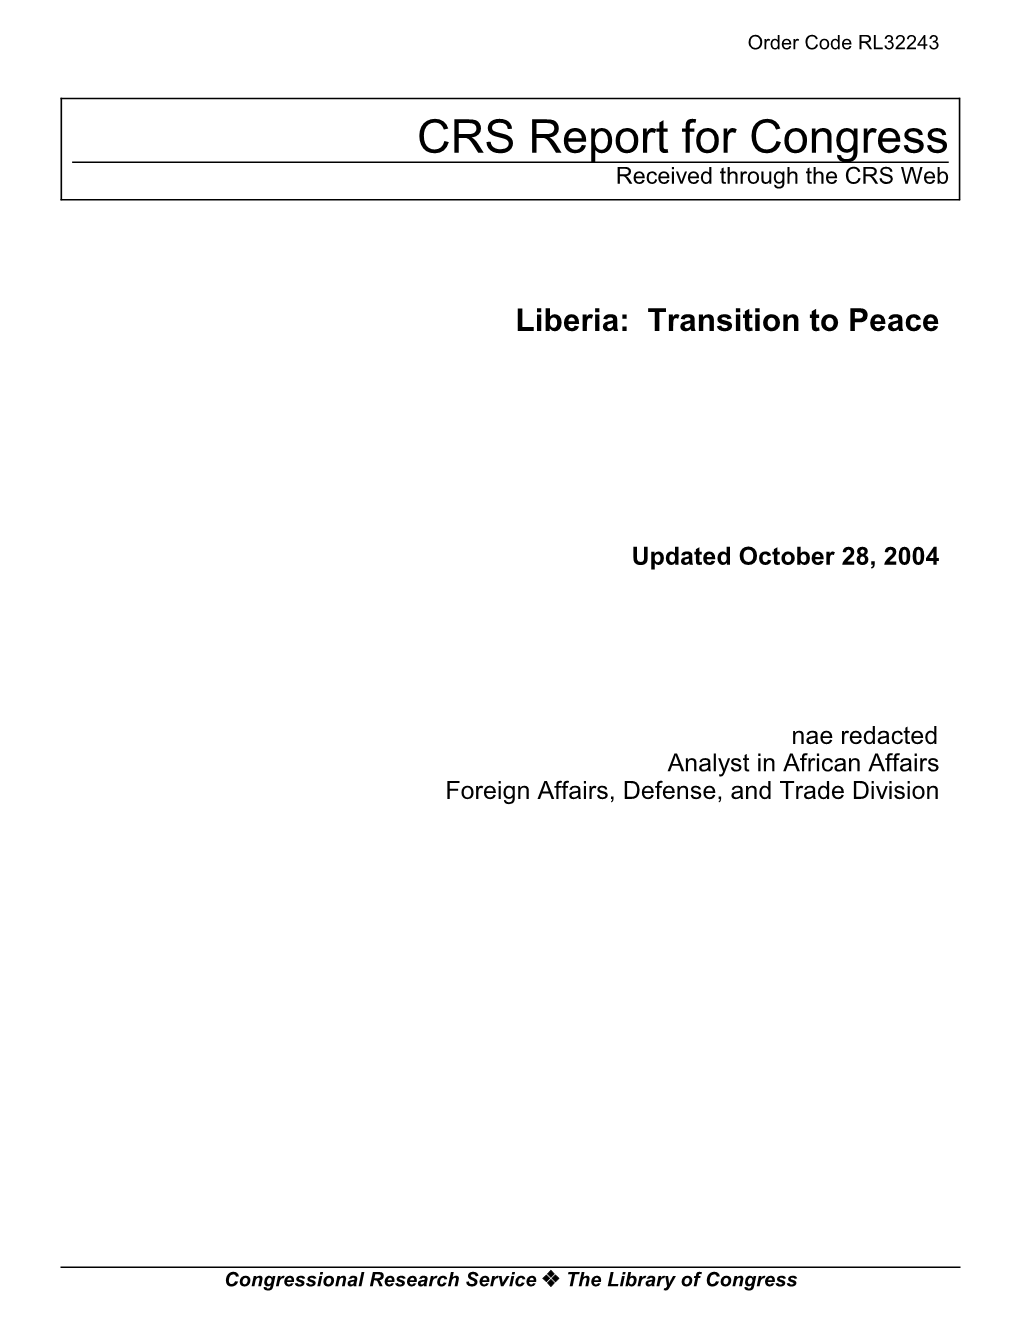 Liberia: Transition to Peace